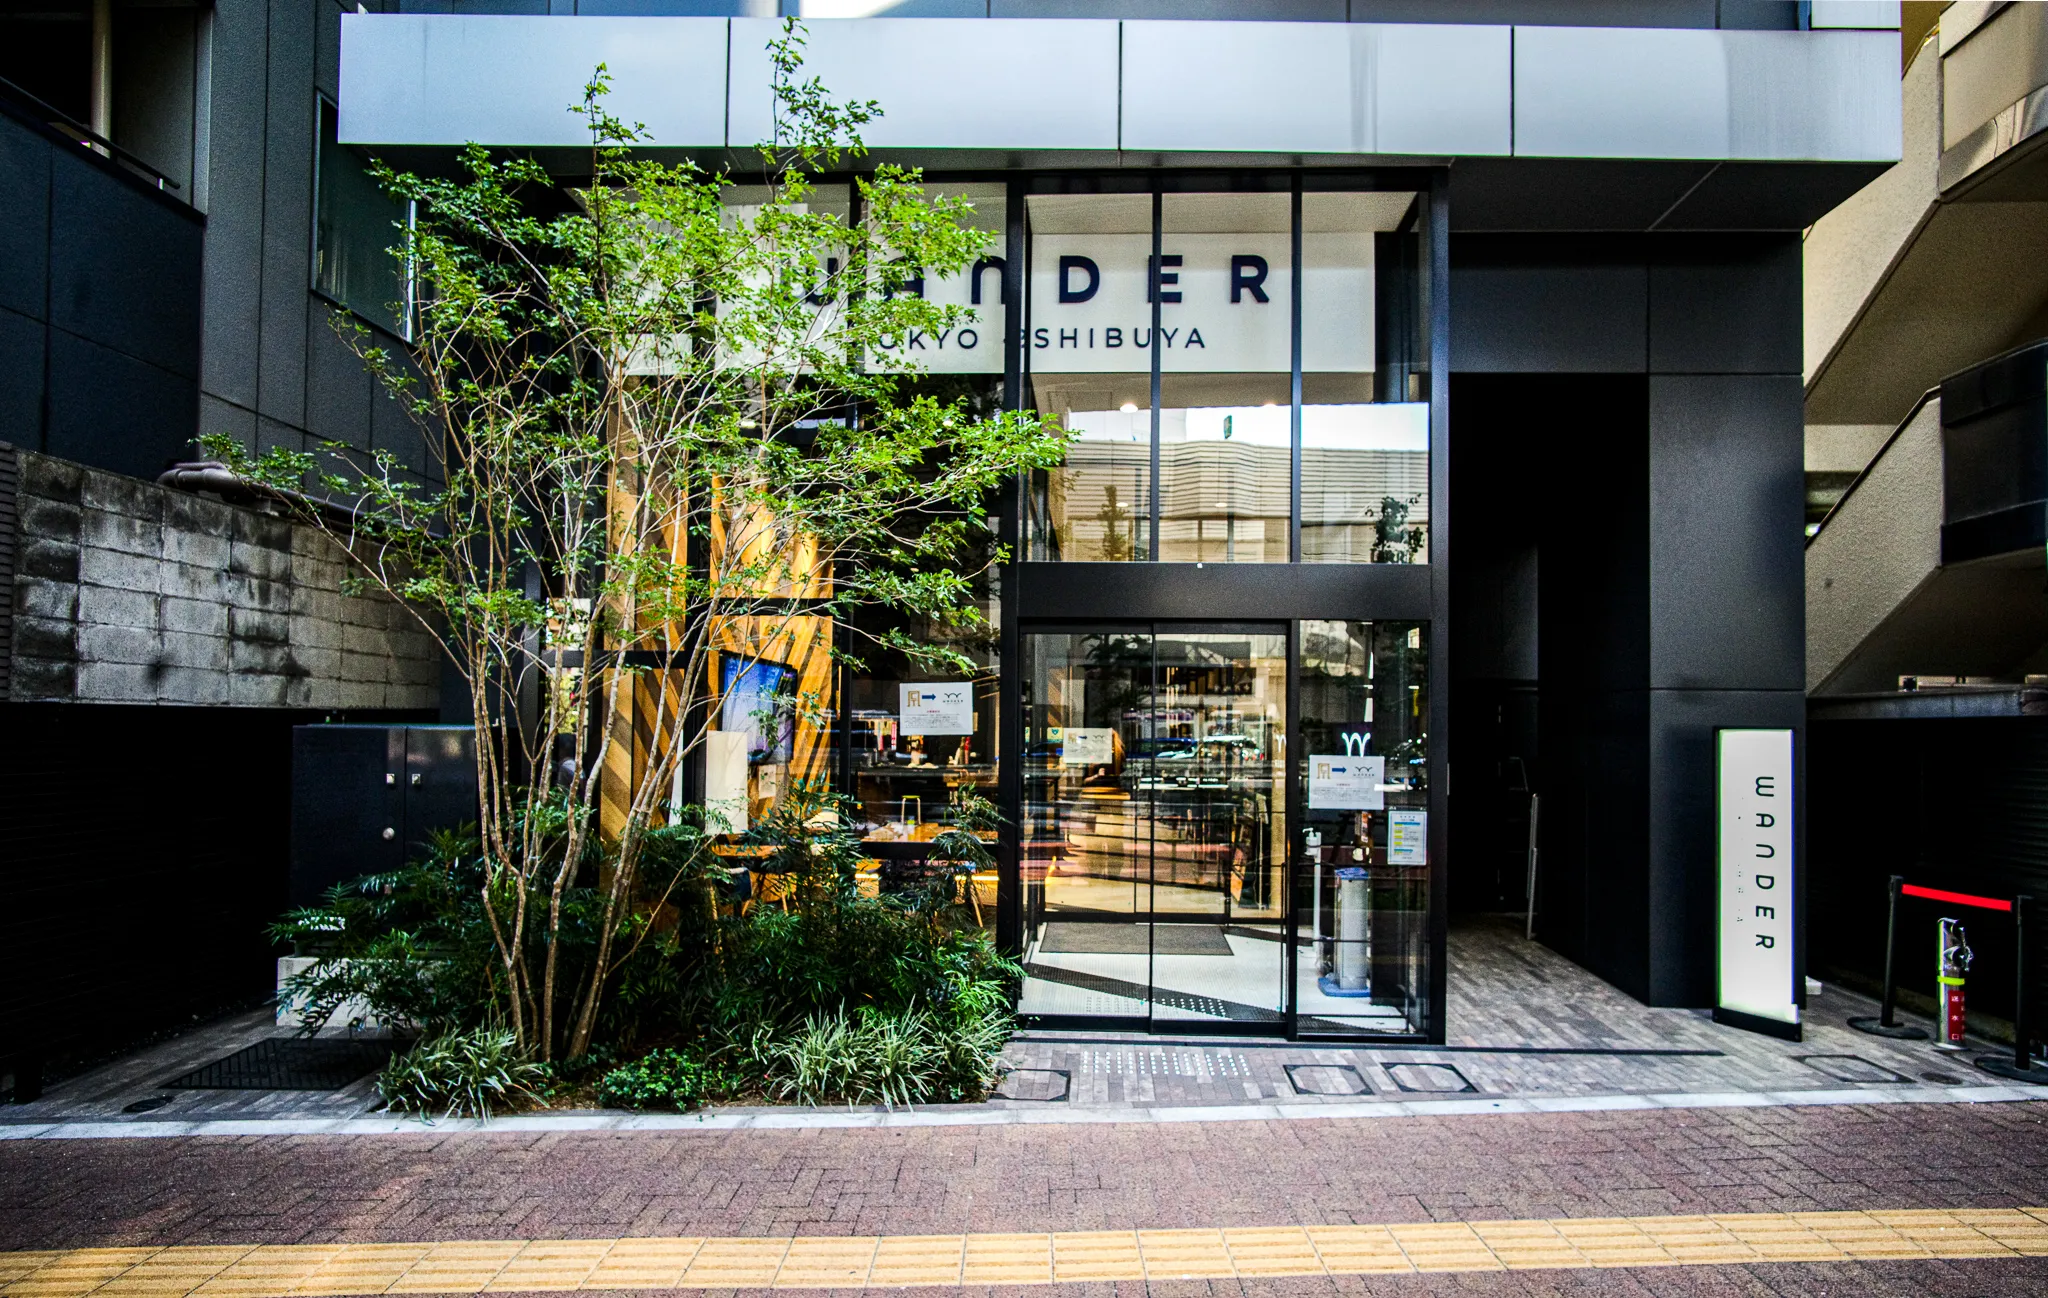 Wander Tokyo Shibuya by Miru Collection